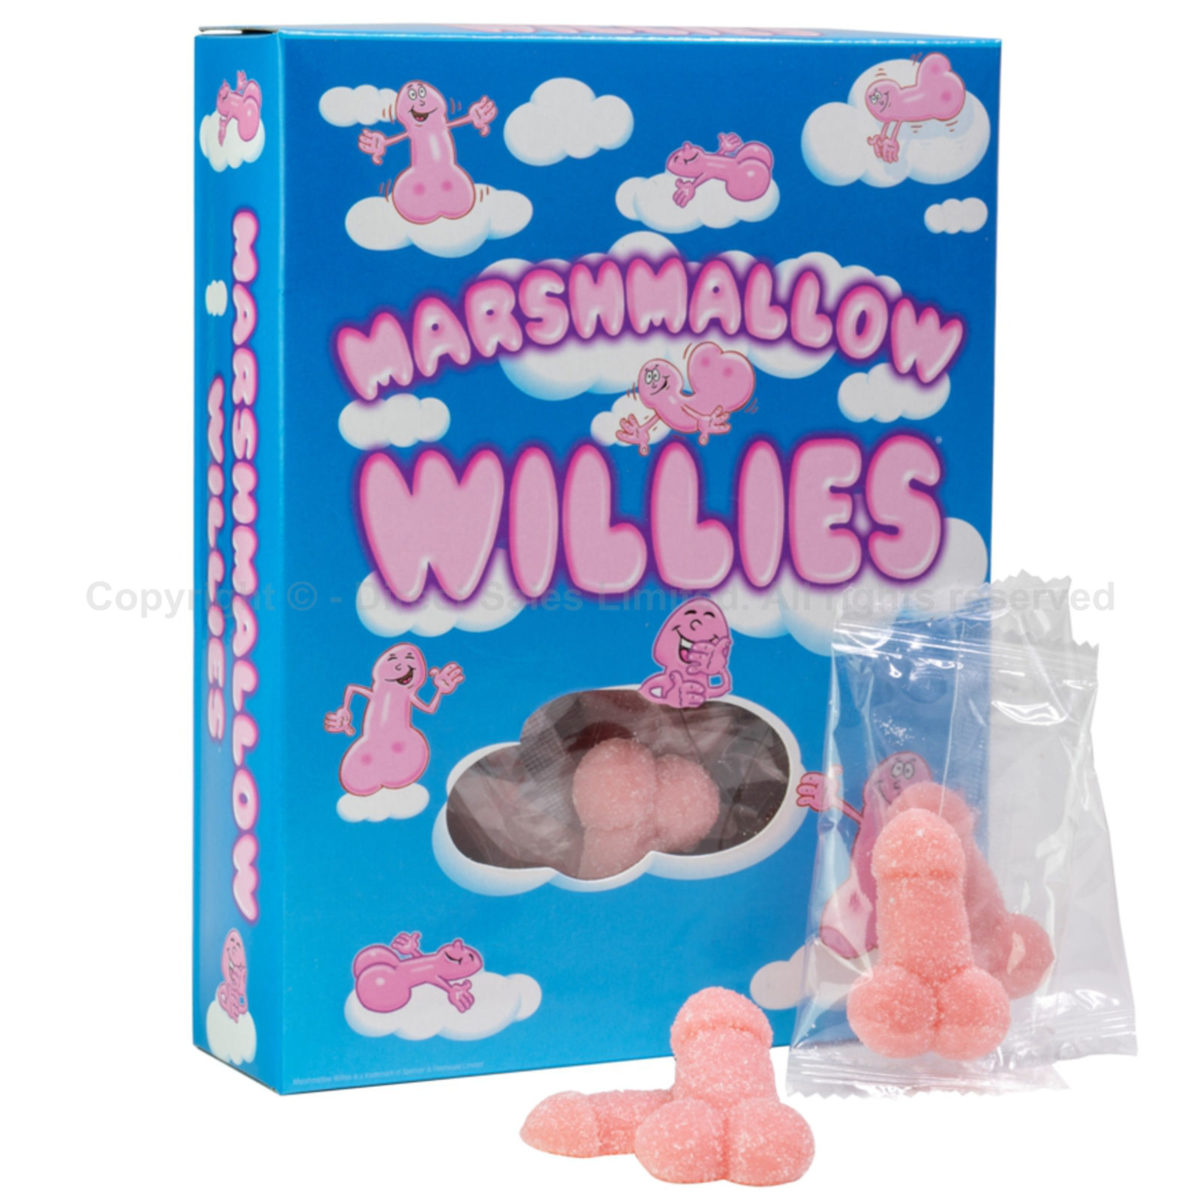 Marshmallow willies-1 box